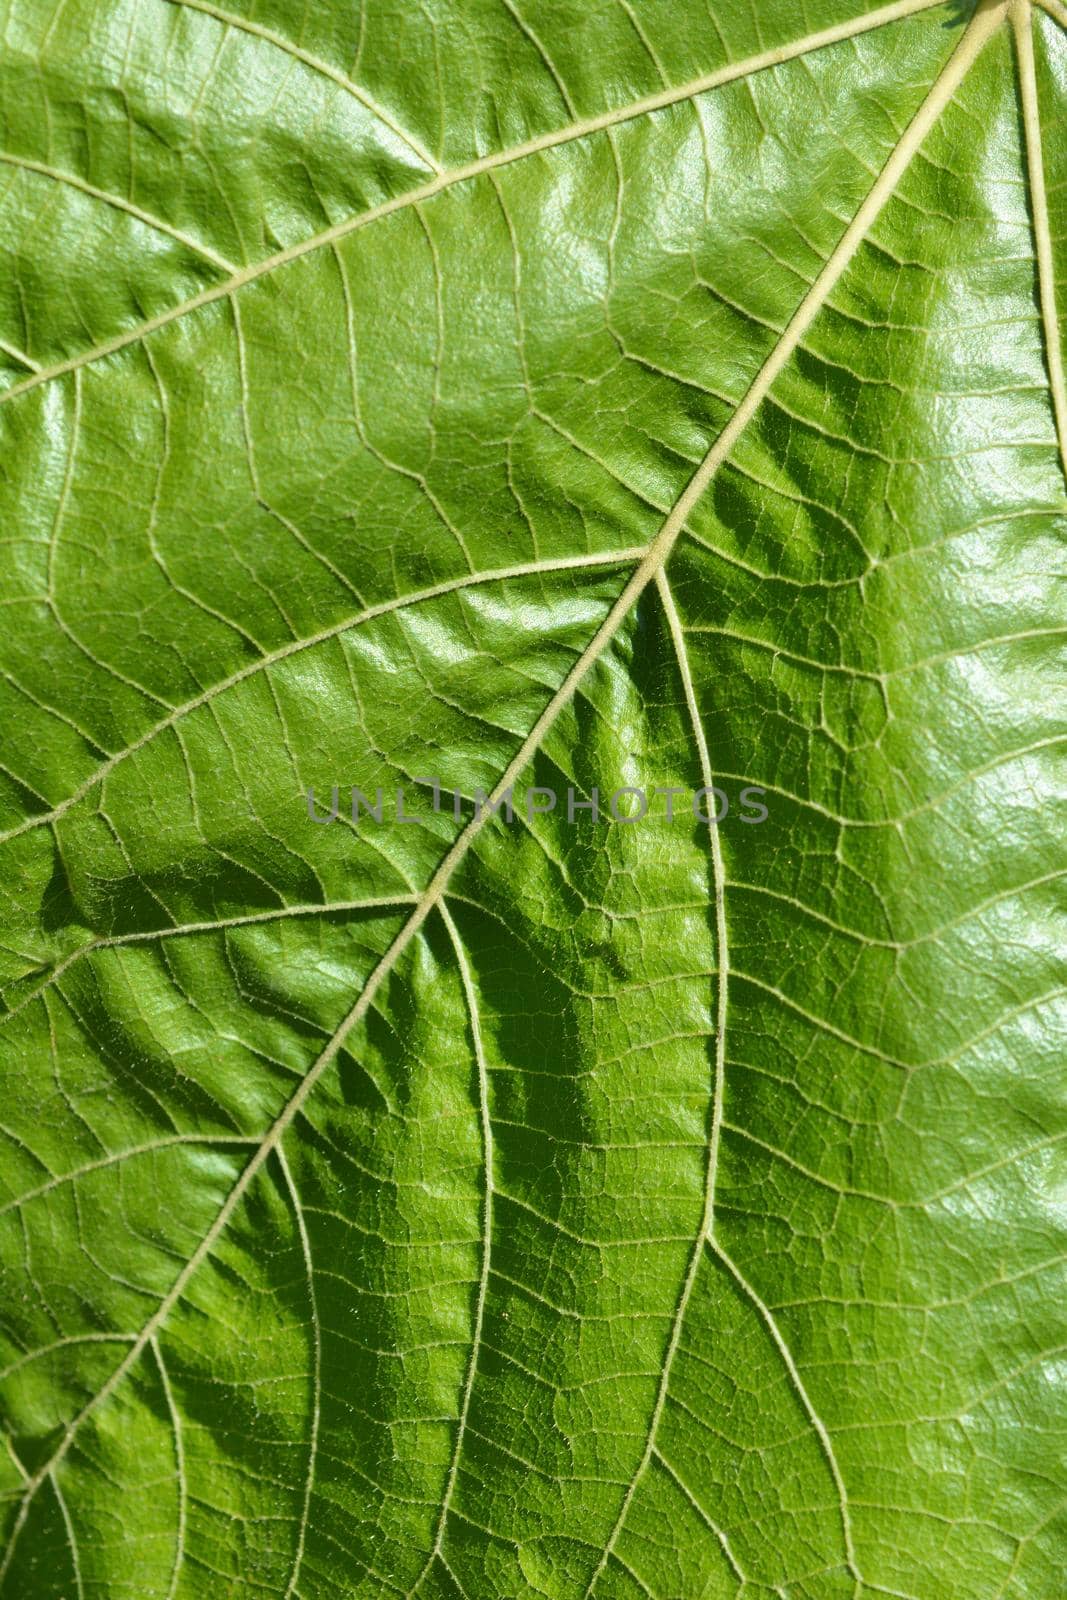 Whau leaf detail - Latin name - Entelea arborescens